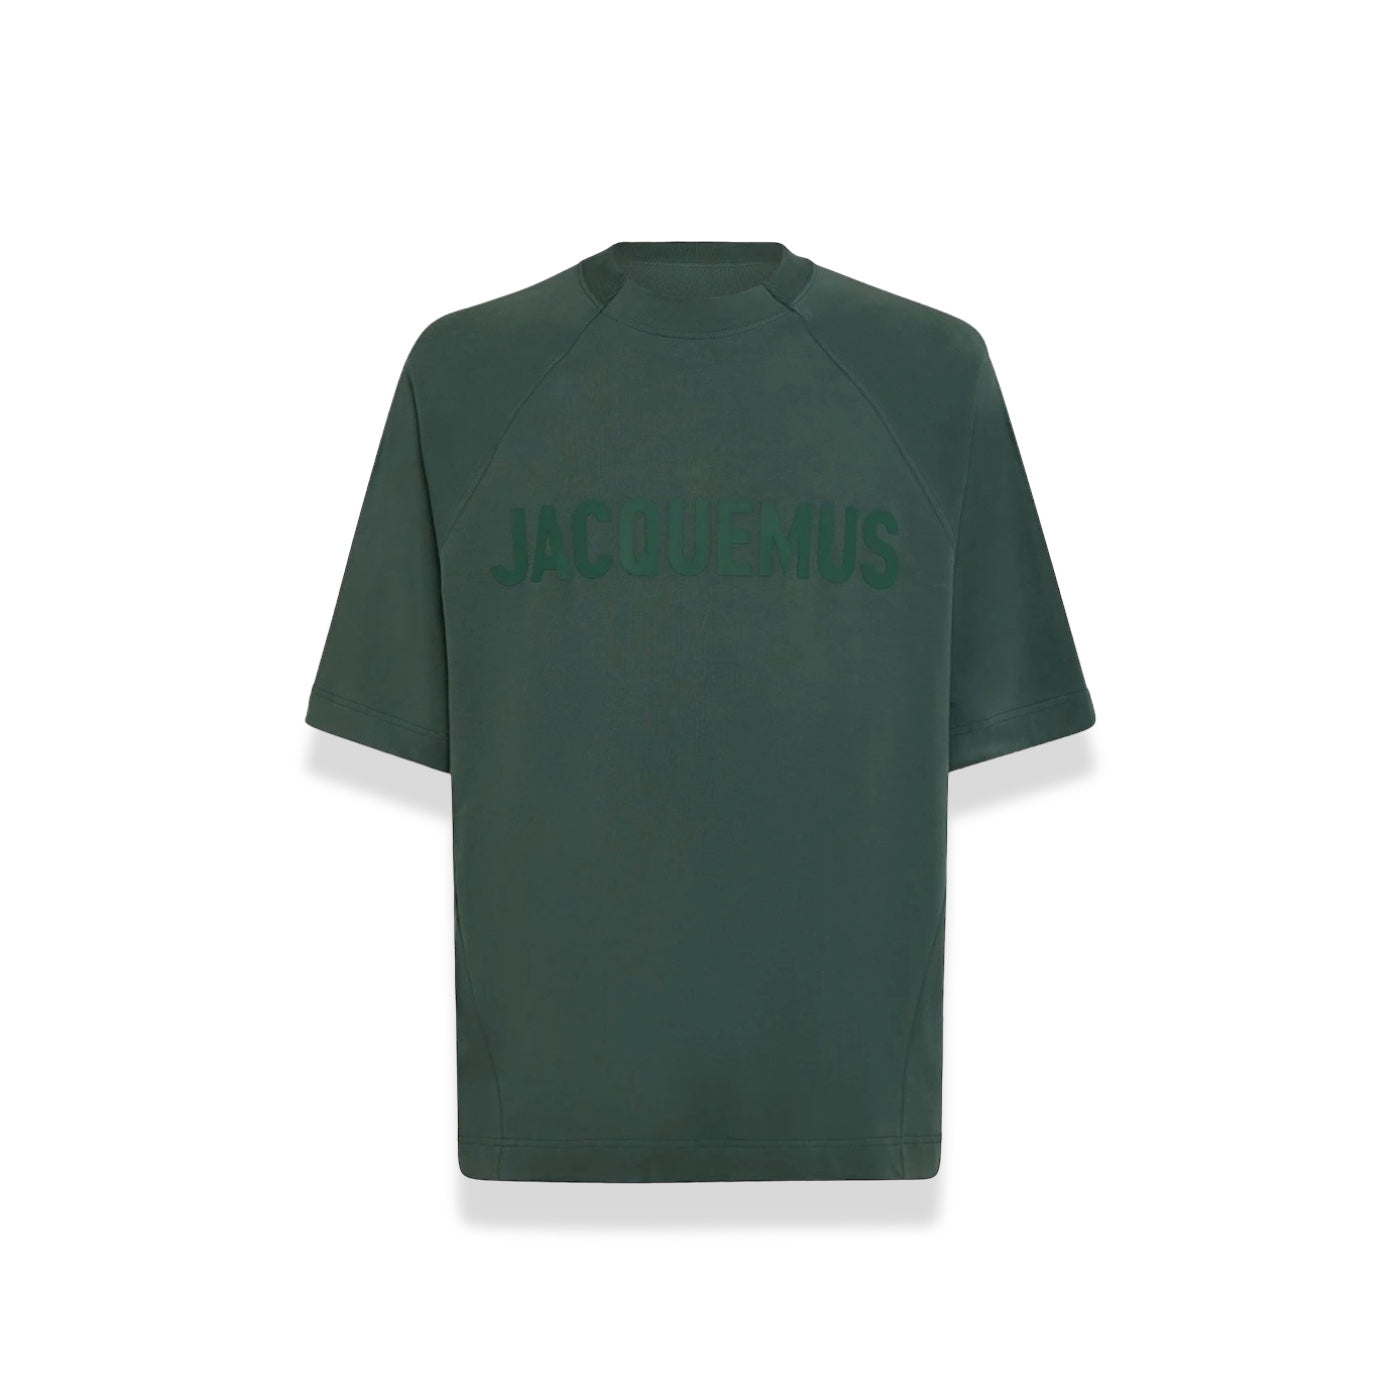 Jacquemus - Le Typo Logo Tee Dark Green